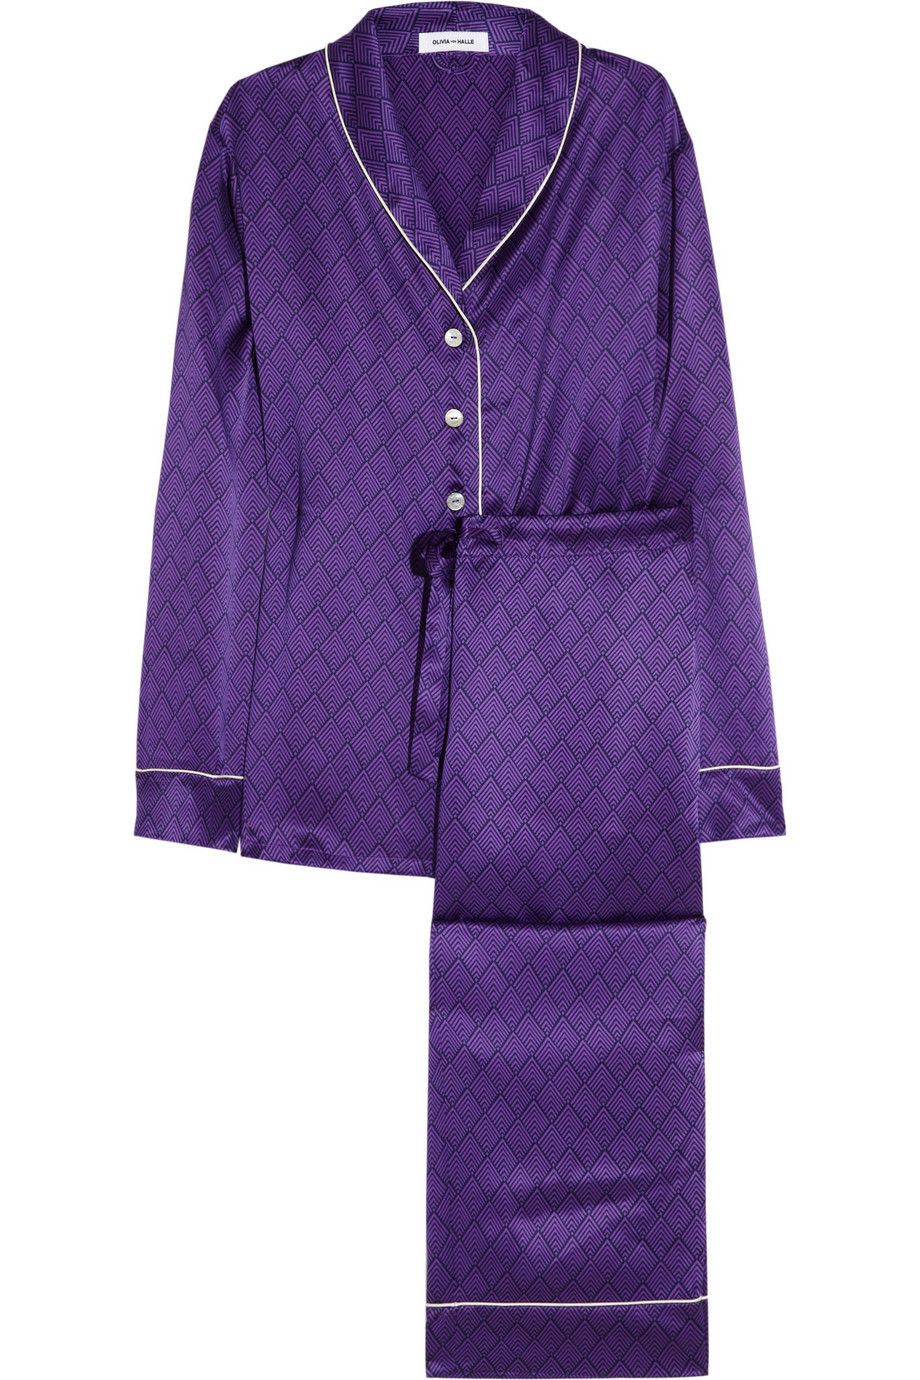 Blue, Product, Sleeve, Collar, Purple, Textile, Violet, Outerwear, Lavender, Magenta, 